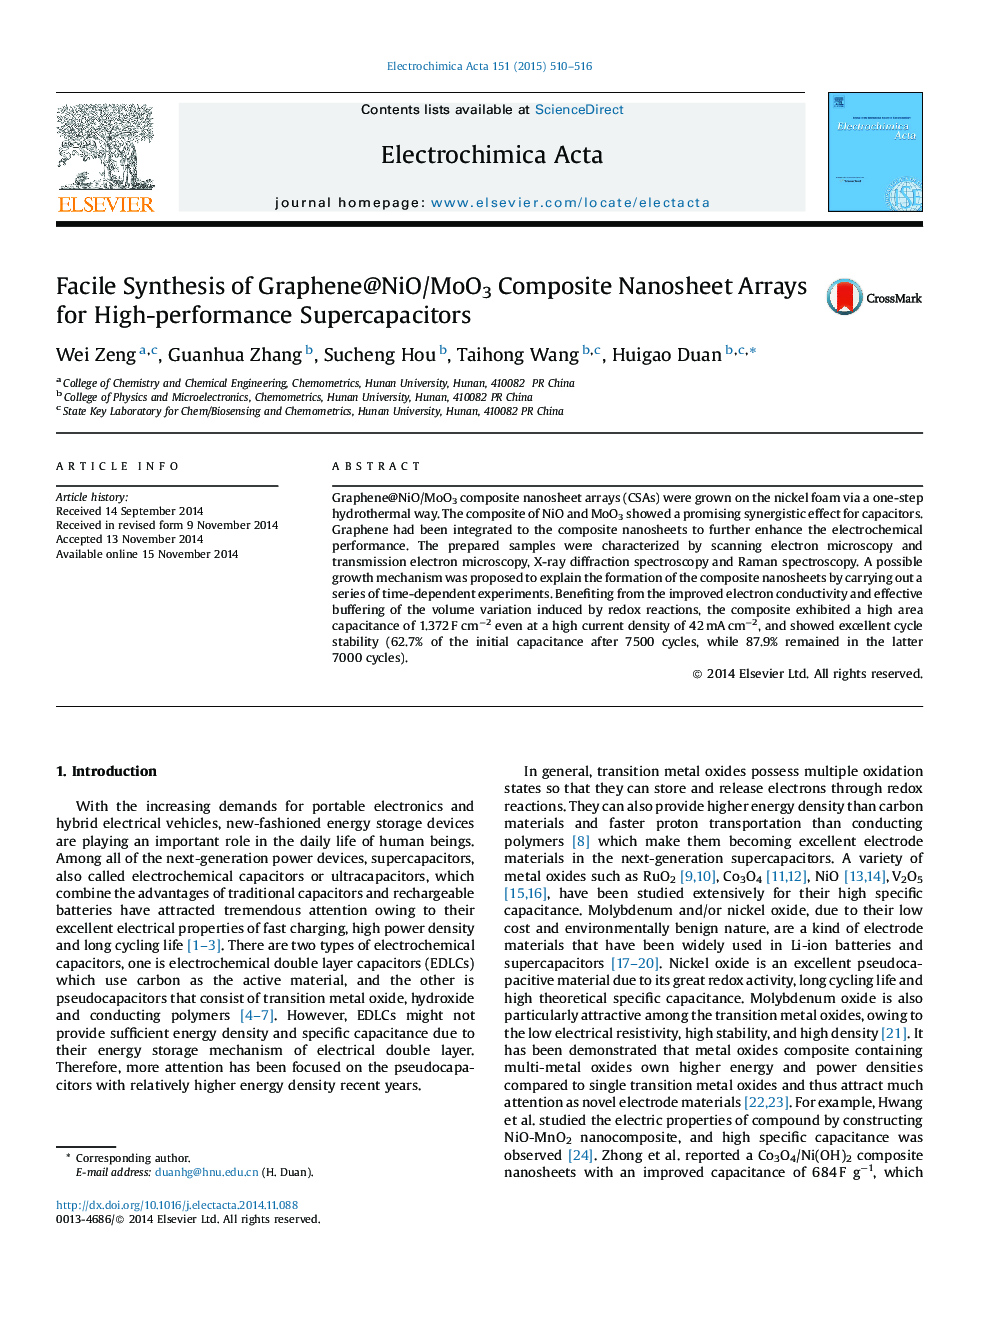 Facile Synthesis of Graphene@NiO/MoO3 Composite Nanosheet Arrays for High-performance Supercapacitors